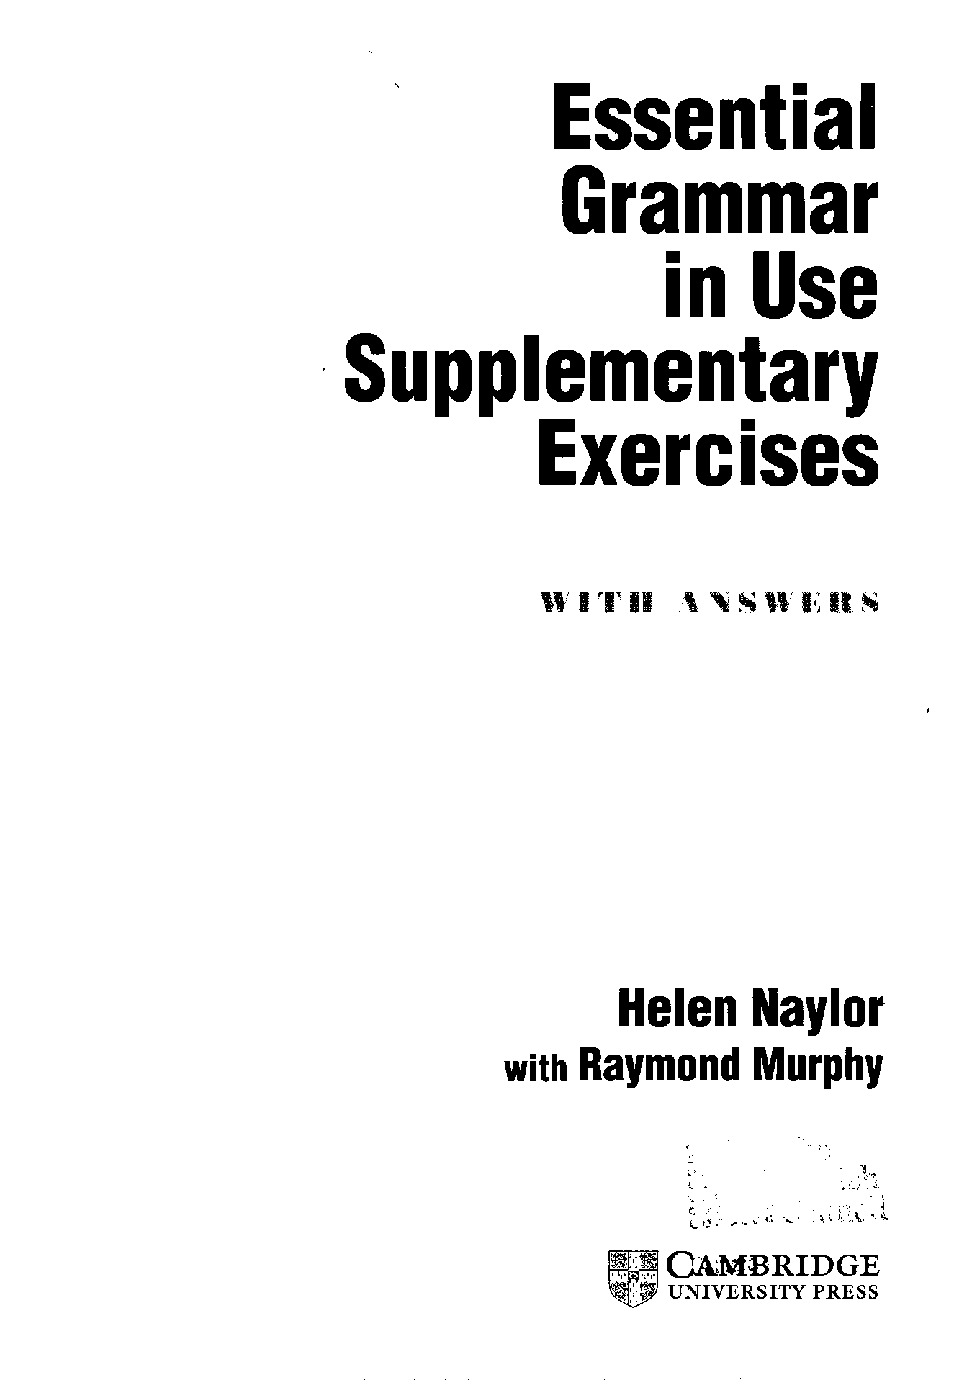 Sách Essential Grammar in Use Supplementary Exercises | Xem online, tải PDF miễn phí (trang 2)